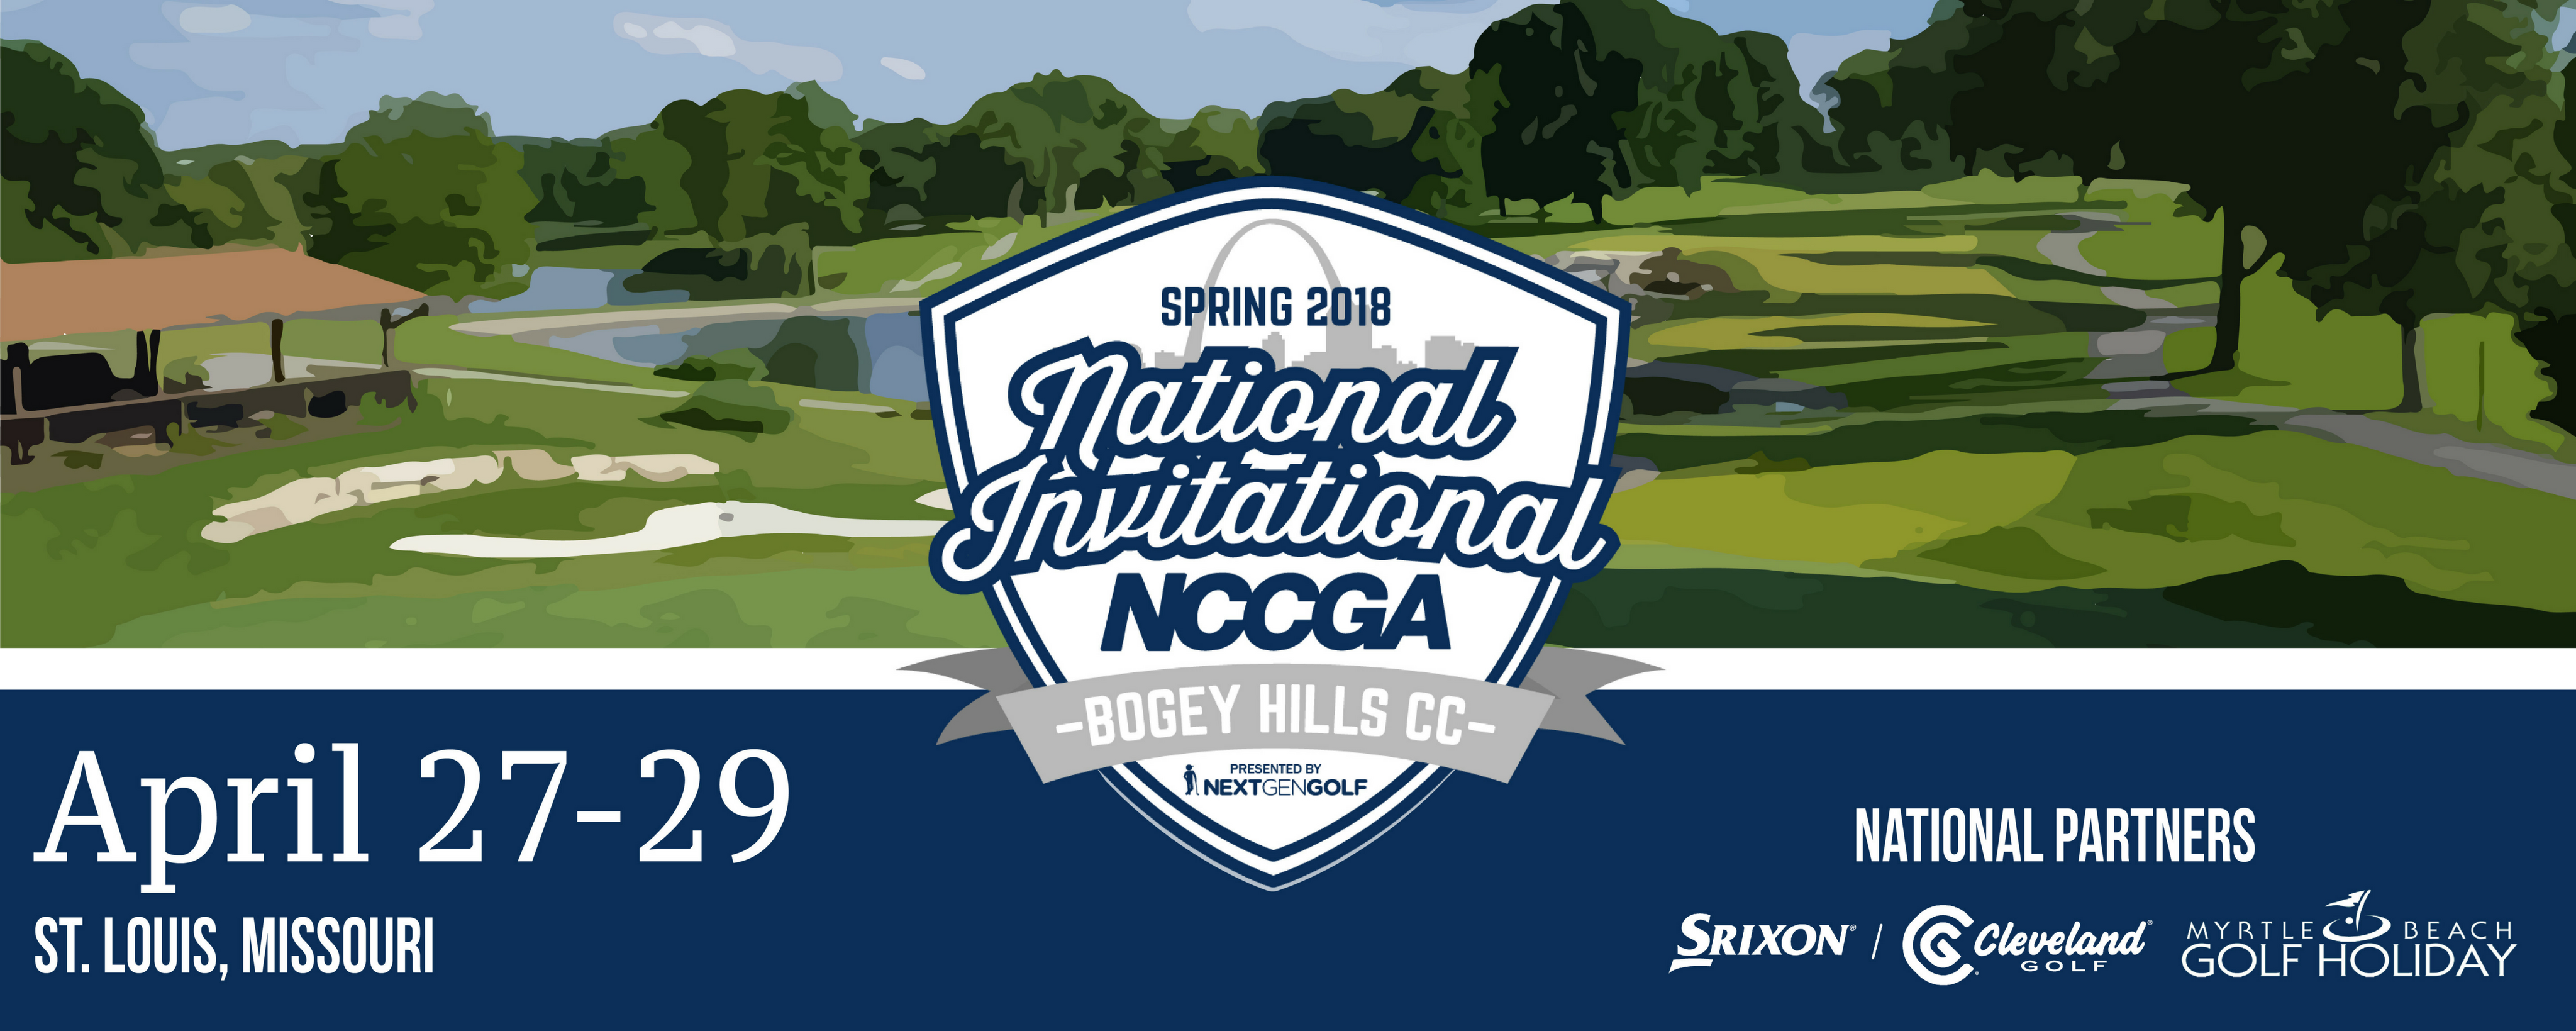 NCCGA 2018 National Invitational